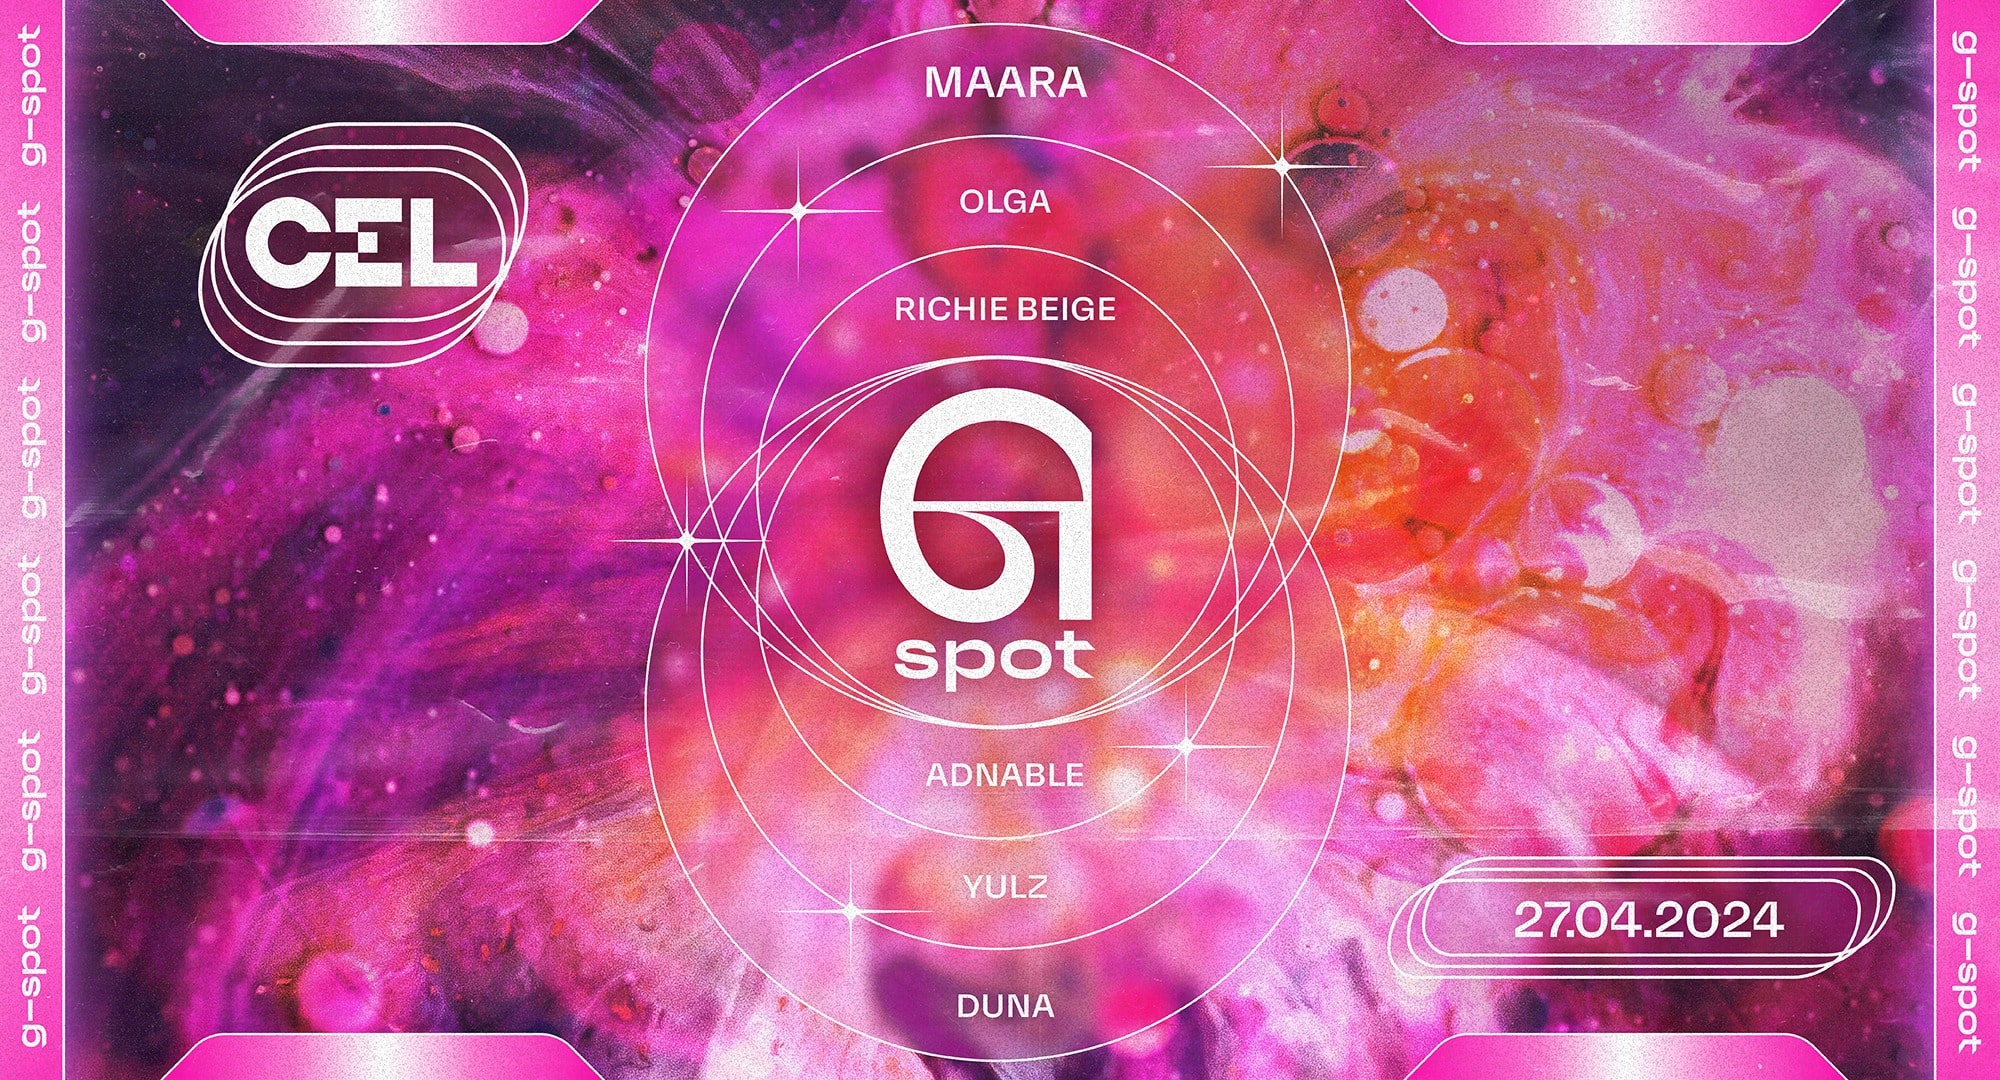 CEL x G-Spot: Maara (CA)